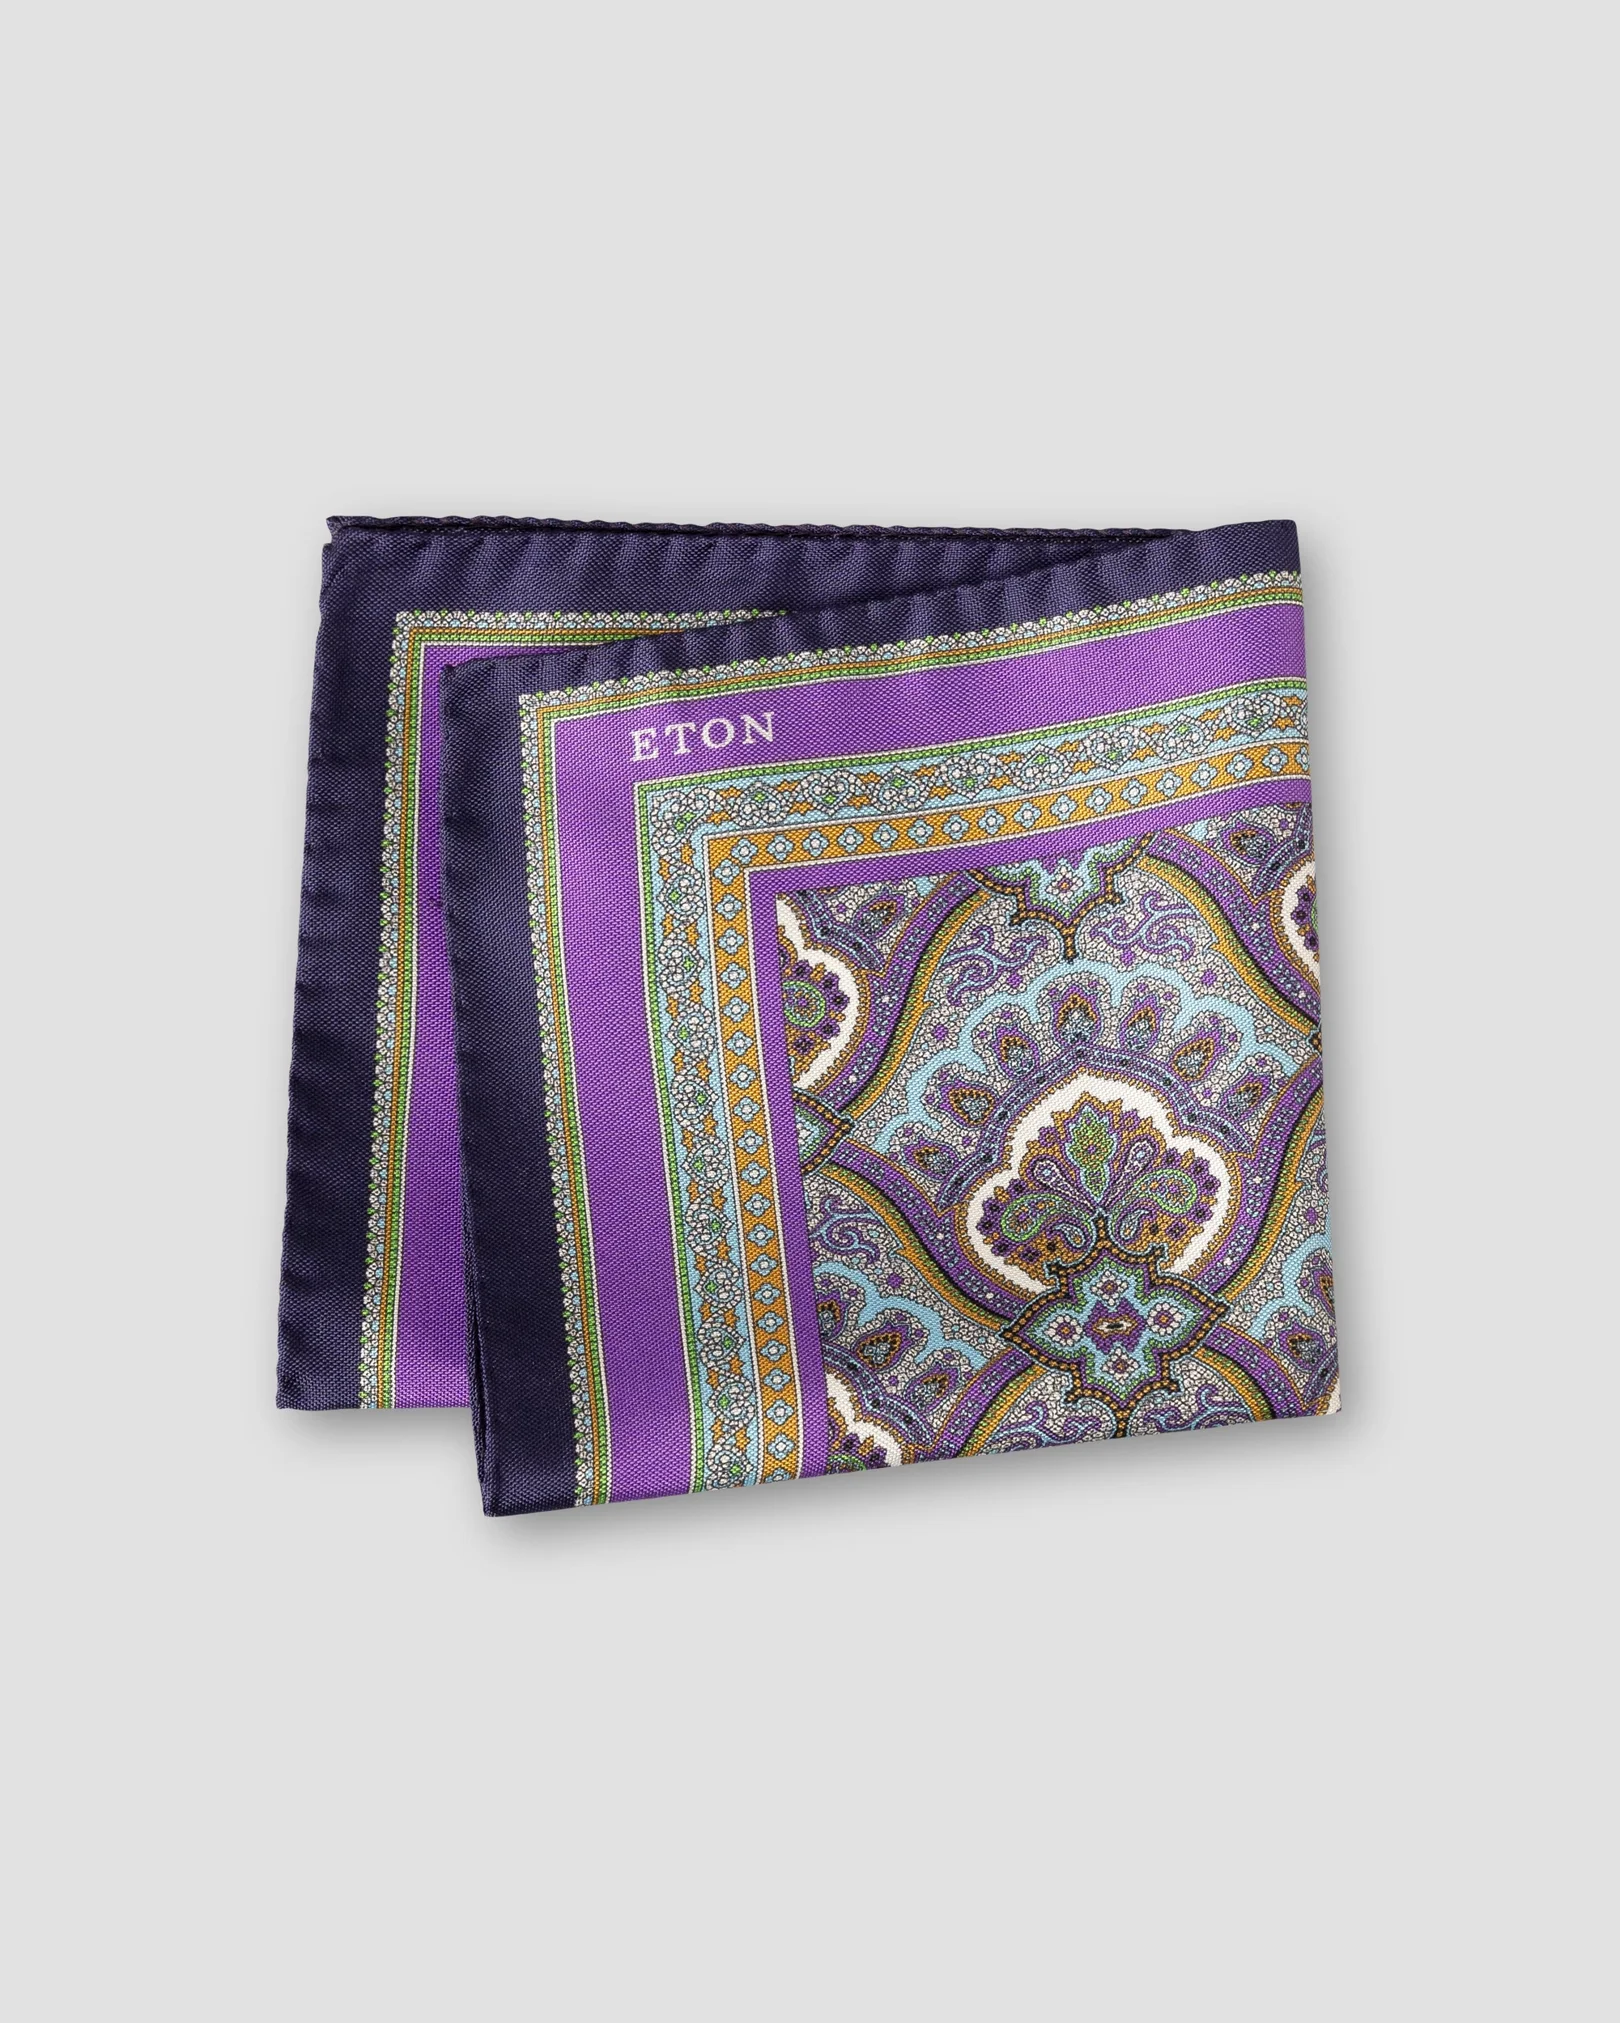 Eton - purple paisley print pocket square